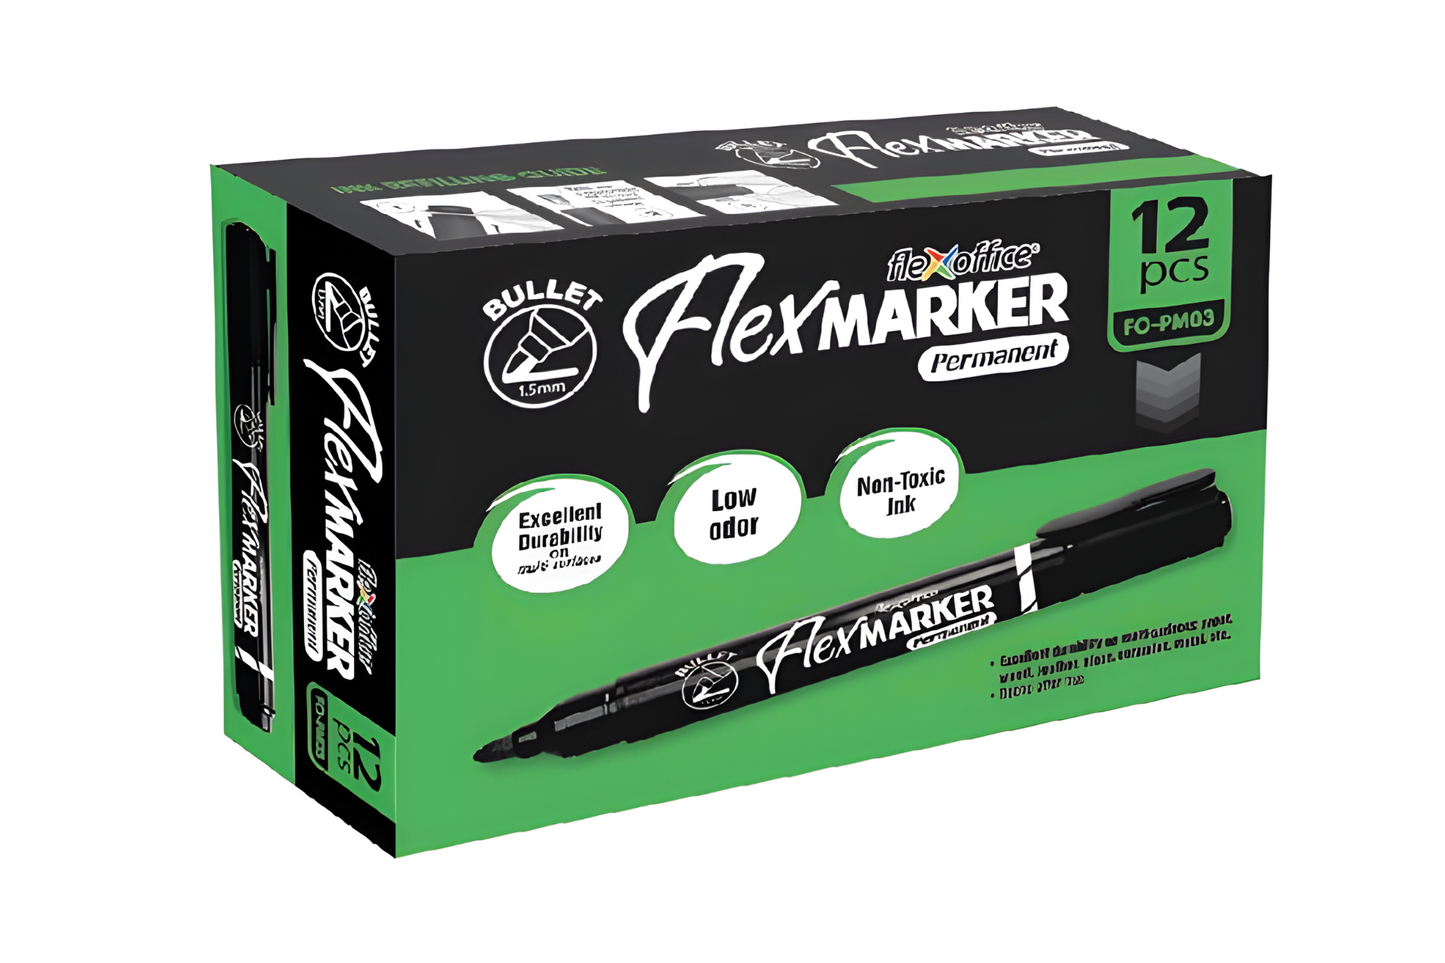 FlexOffice Permanent Marker FO-PM03 | 12pcs